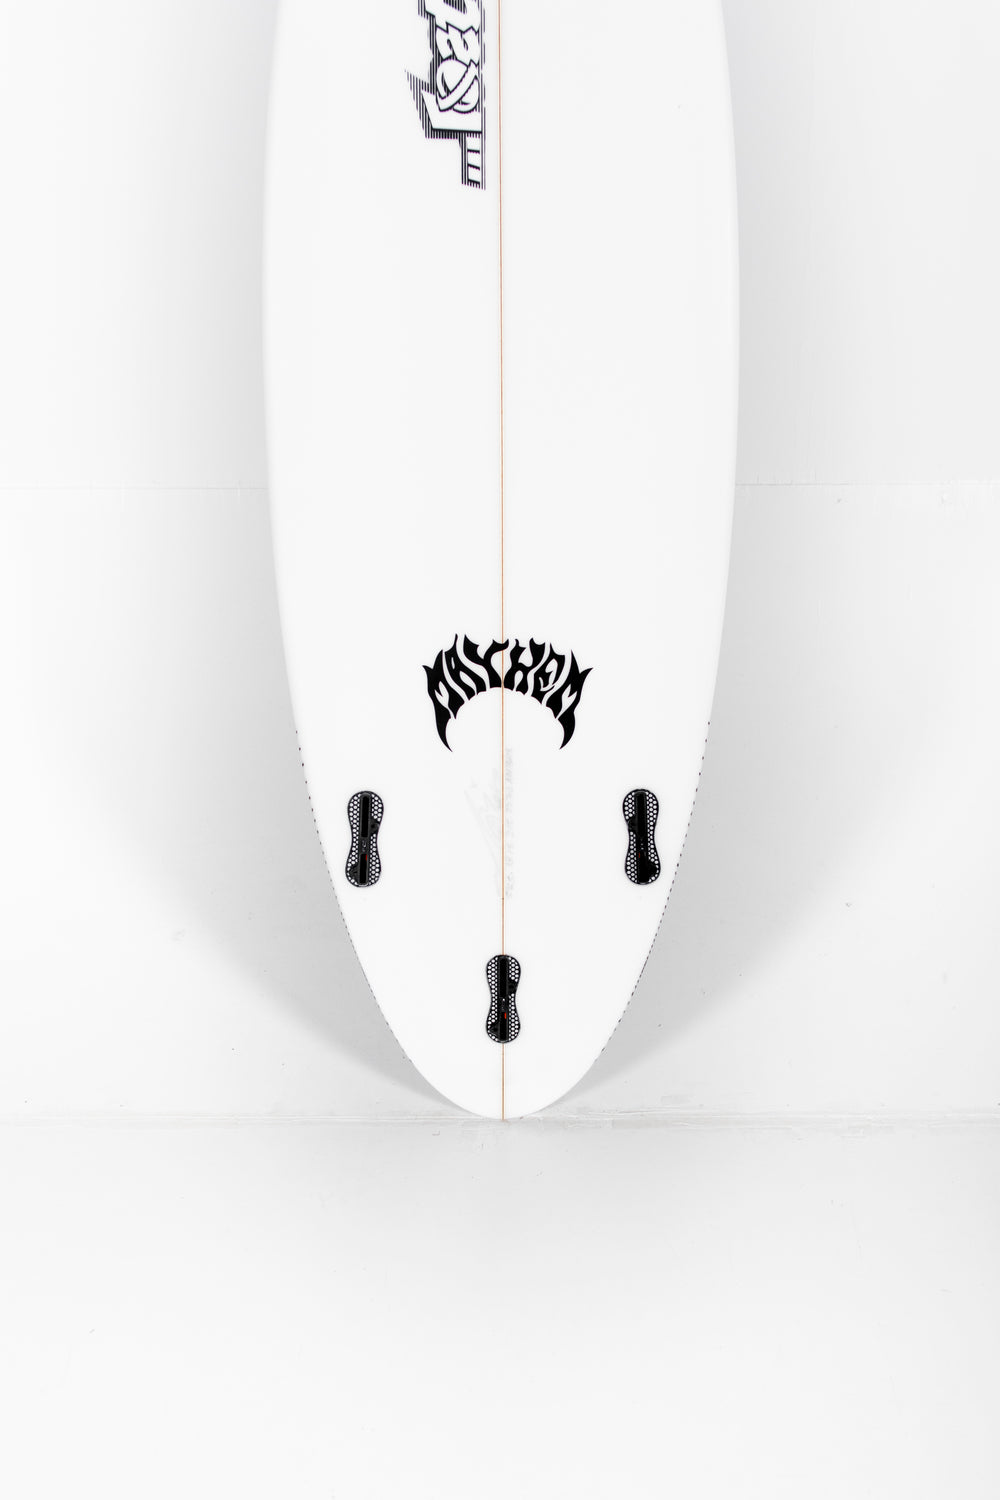 Lost Surfboard - POCKET ROCKET by Matt Biolos - 5'8” 1/2 x 18,18 x